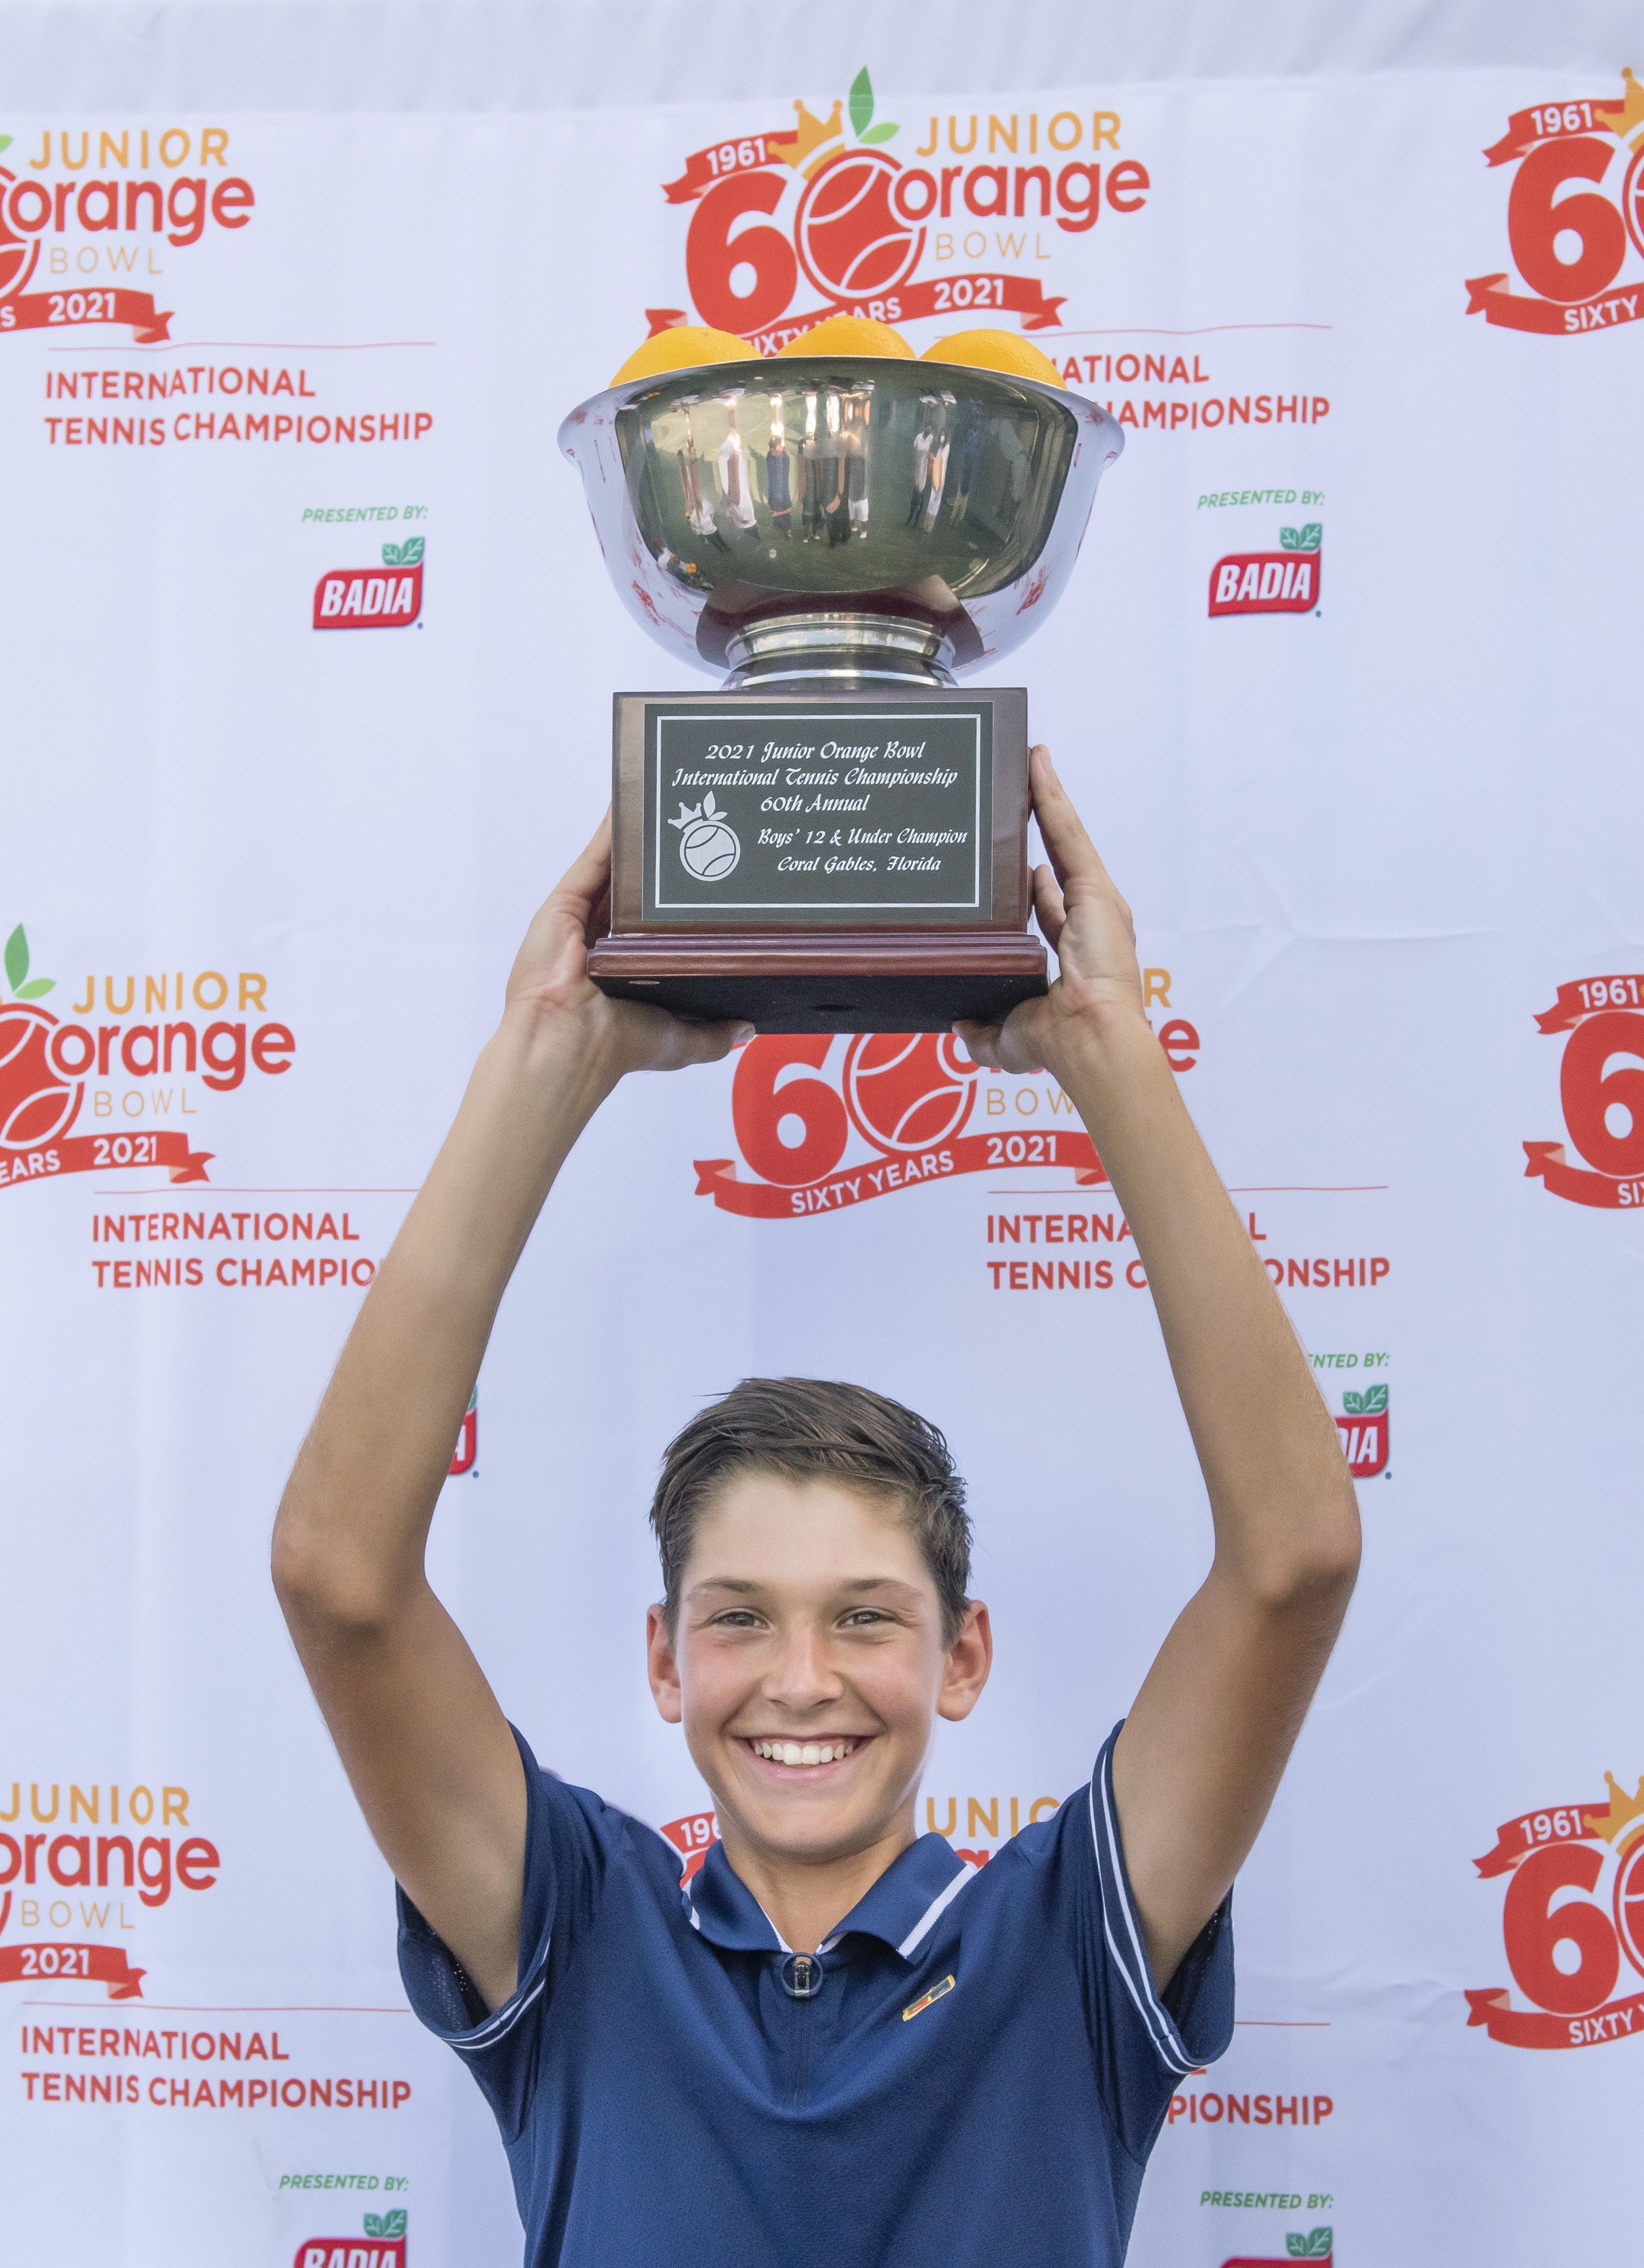 Svit Suljic is first Slovenian to win Junior Orange Bowl Boys' 12s title